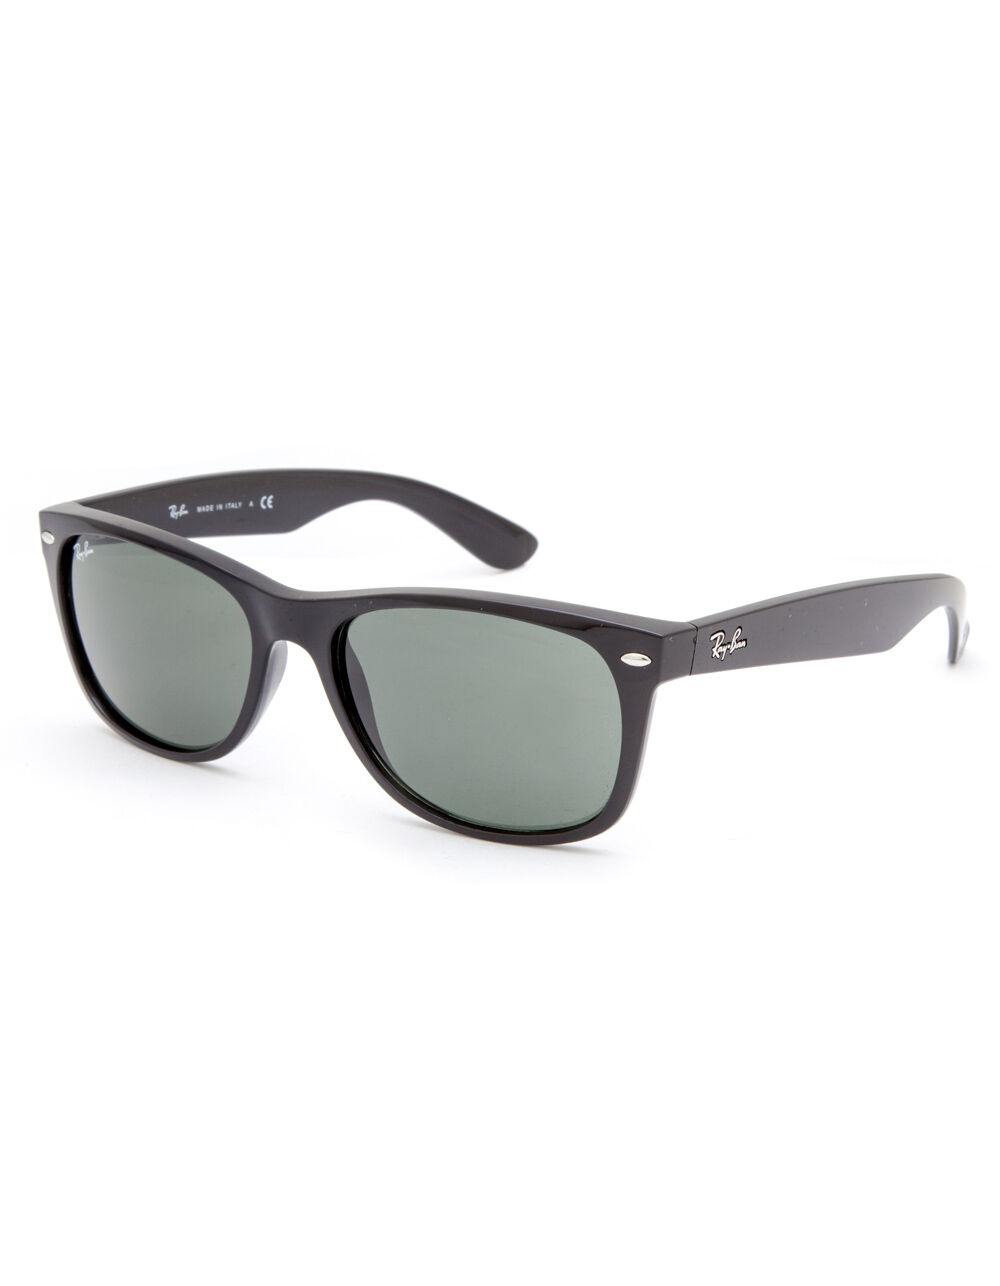 Ray-Ban Wayfarer Sunglasses: Polarized & Classic | Tillys